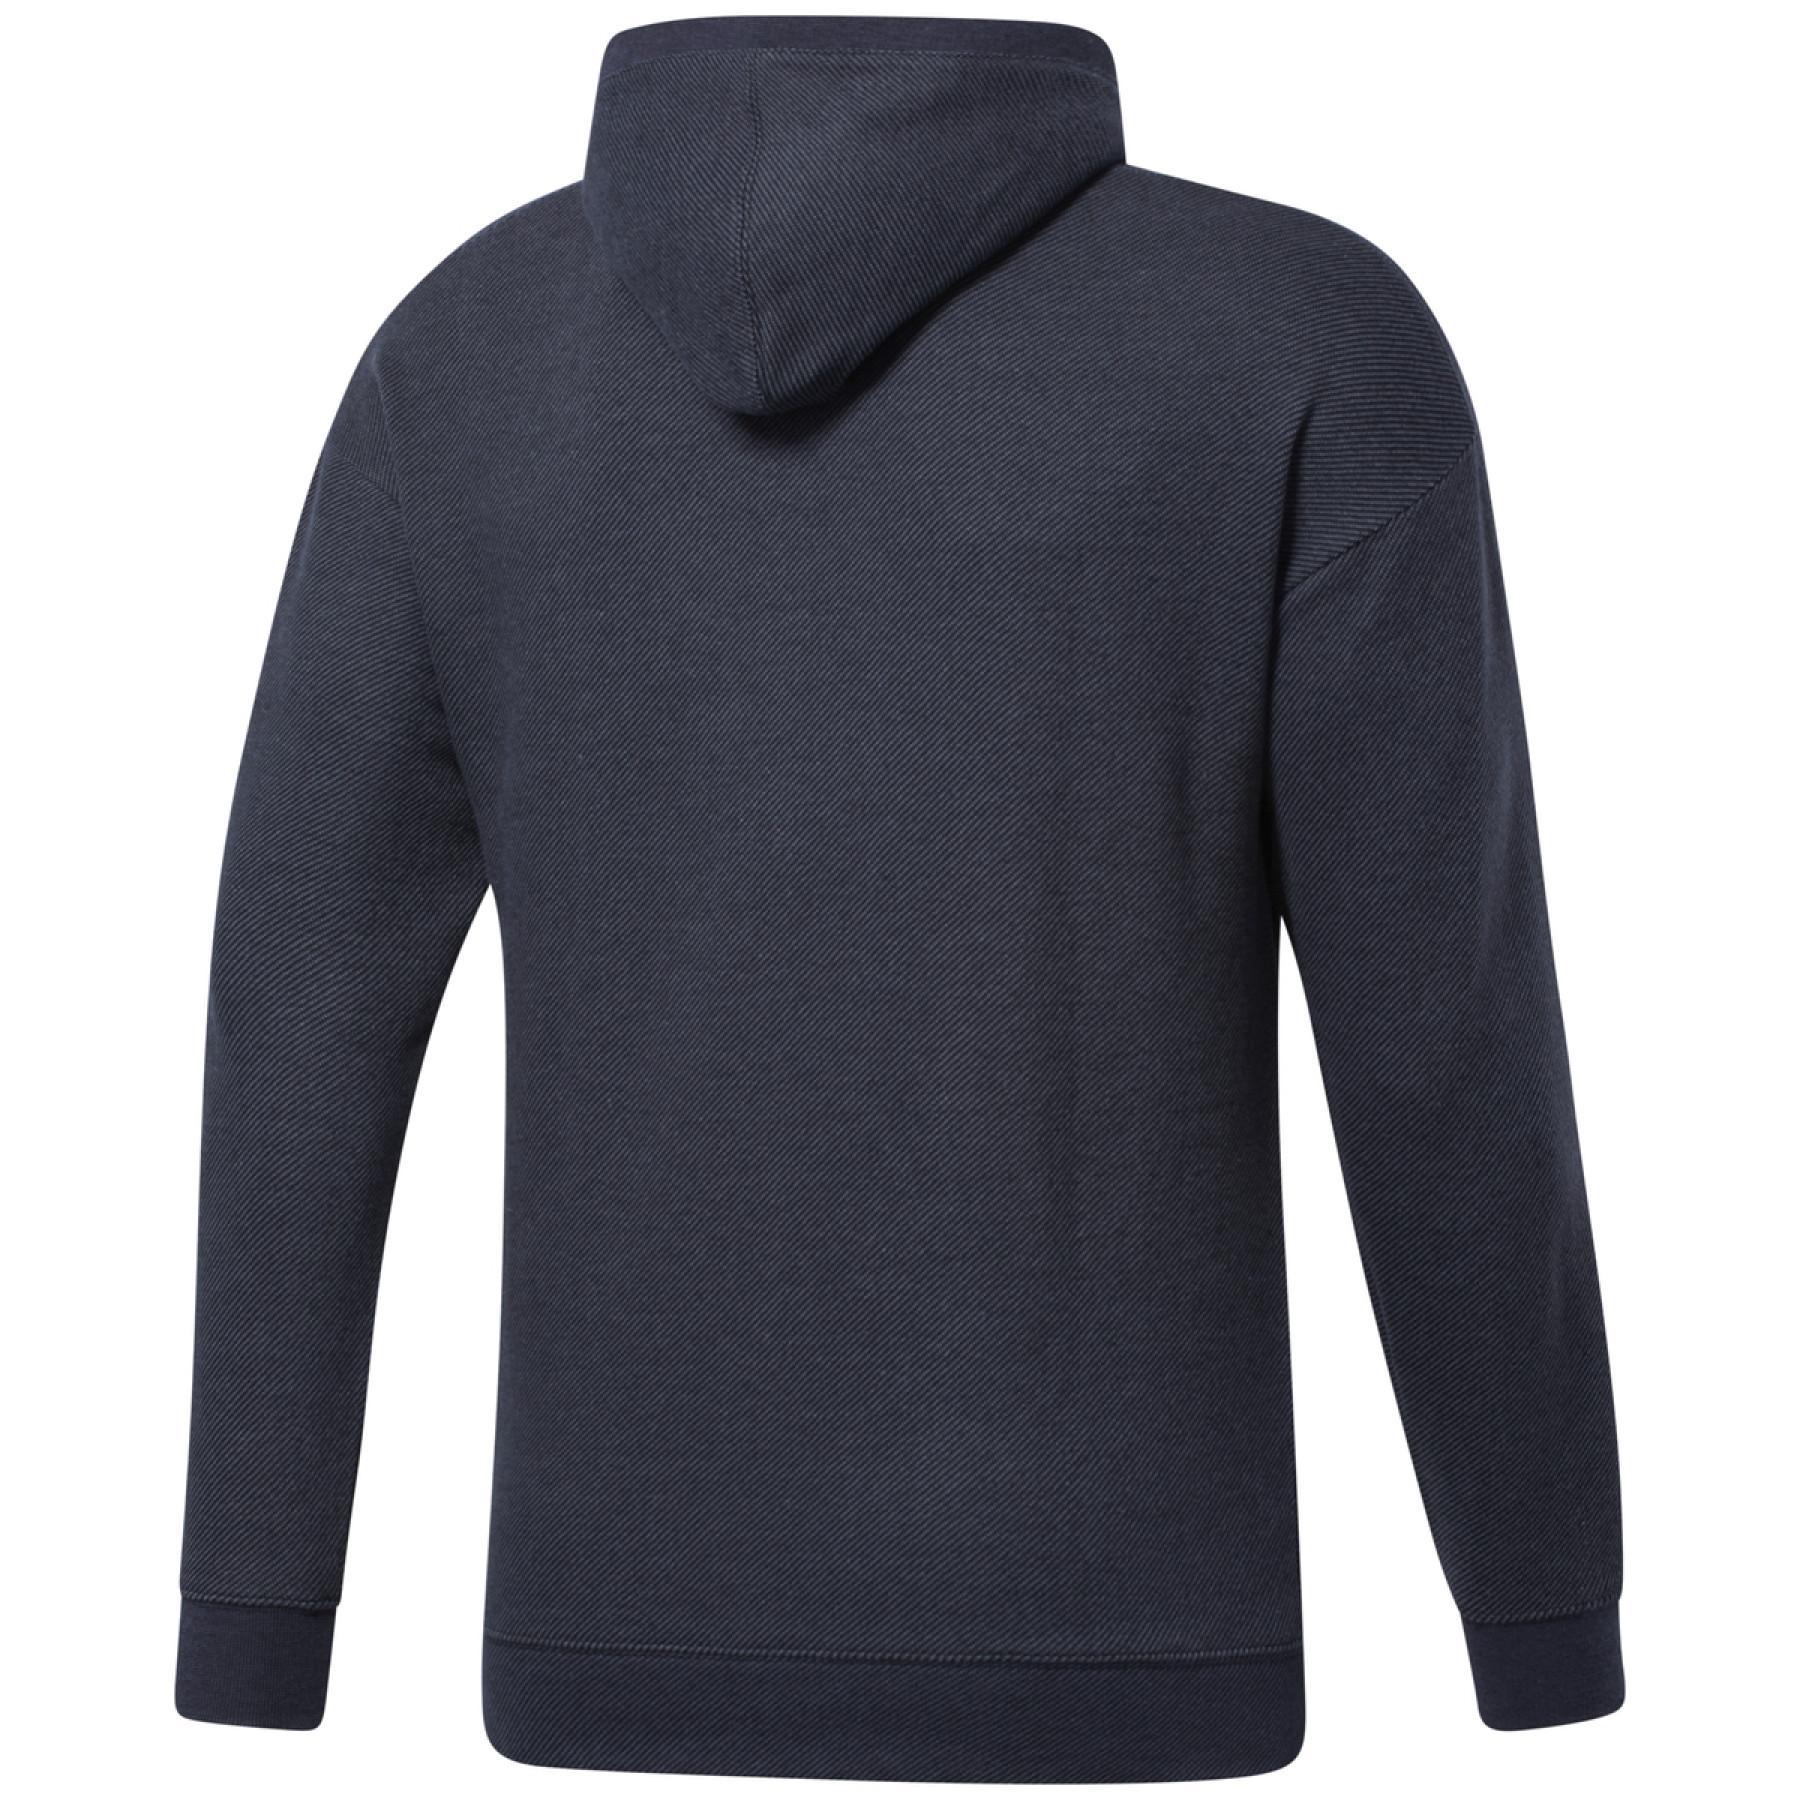 Hooded sweatshirt Reebok Training Essentials Mélange